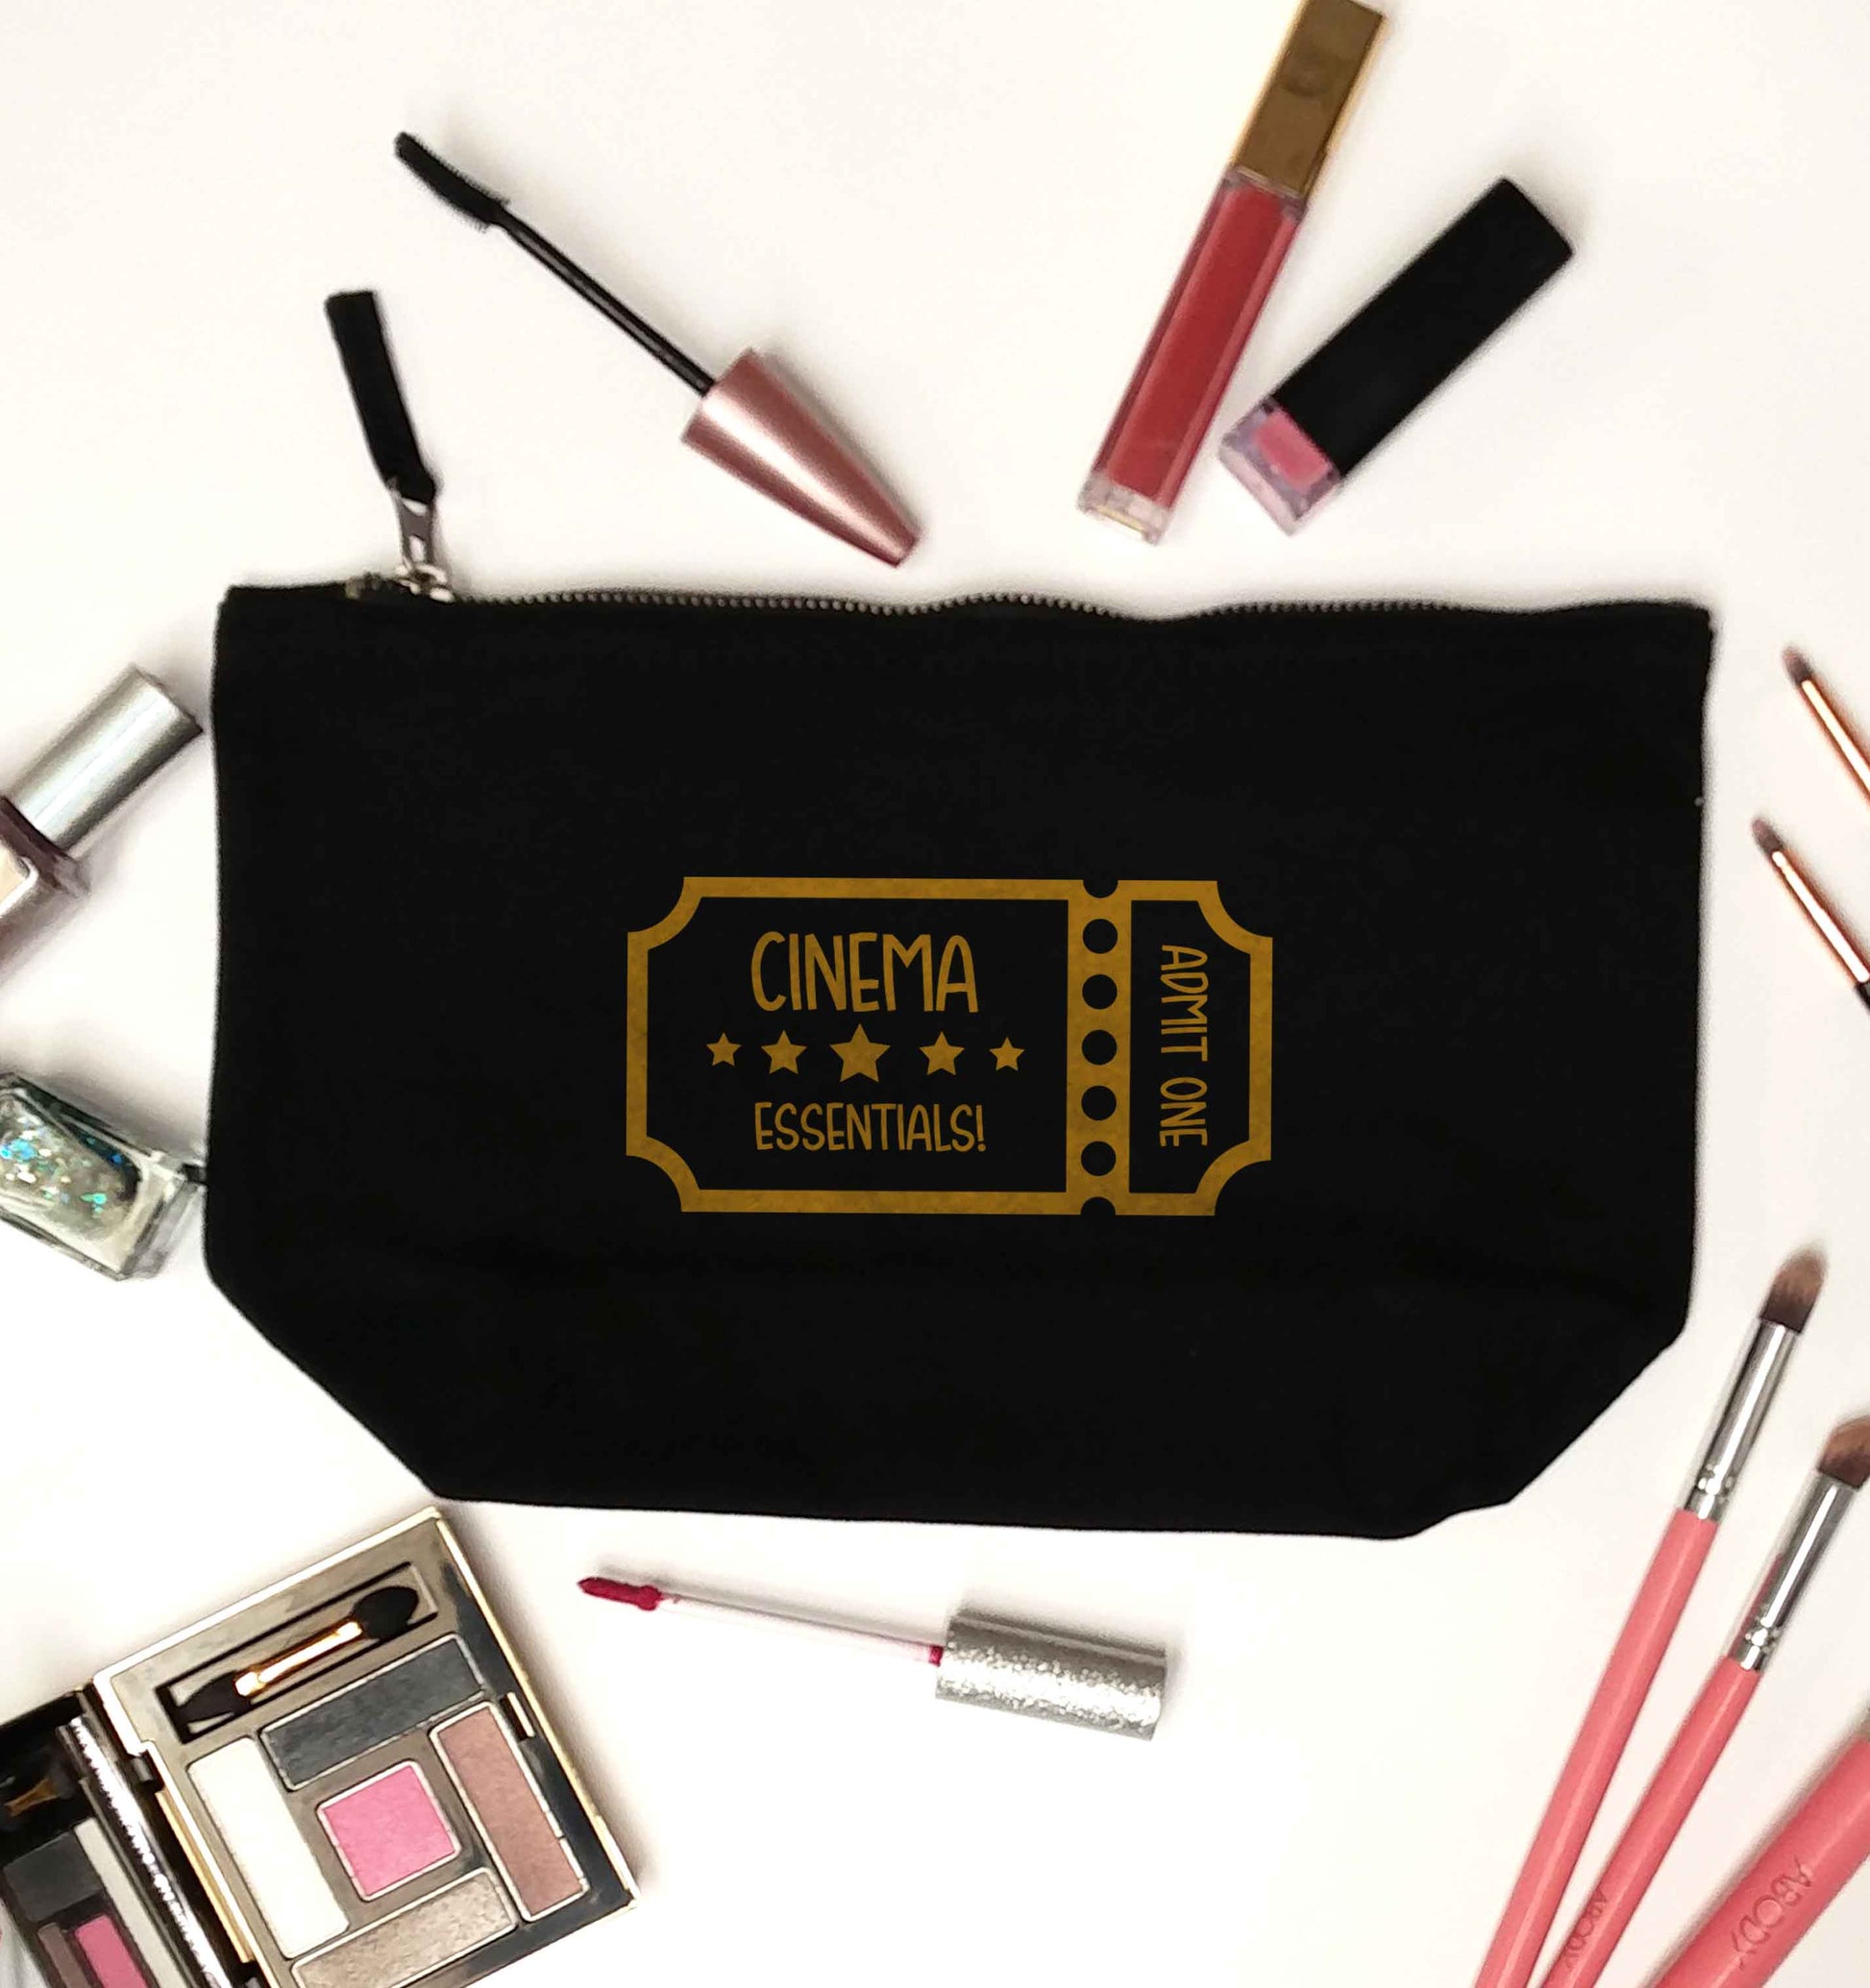 Cinema essentials black makeup bag